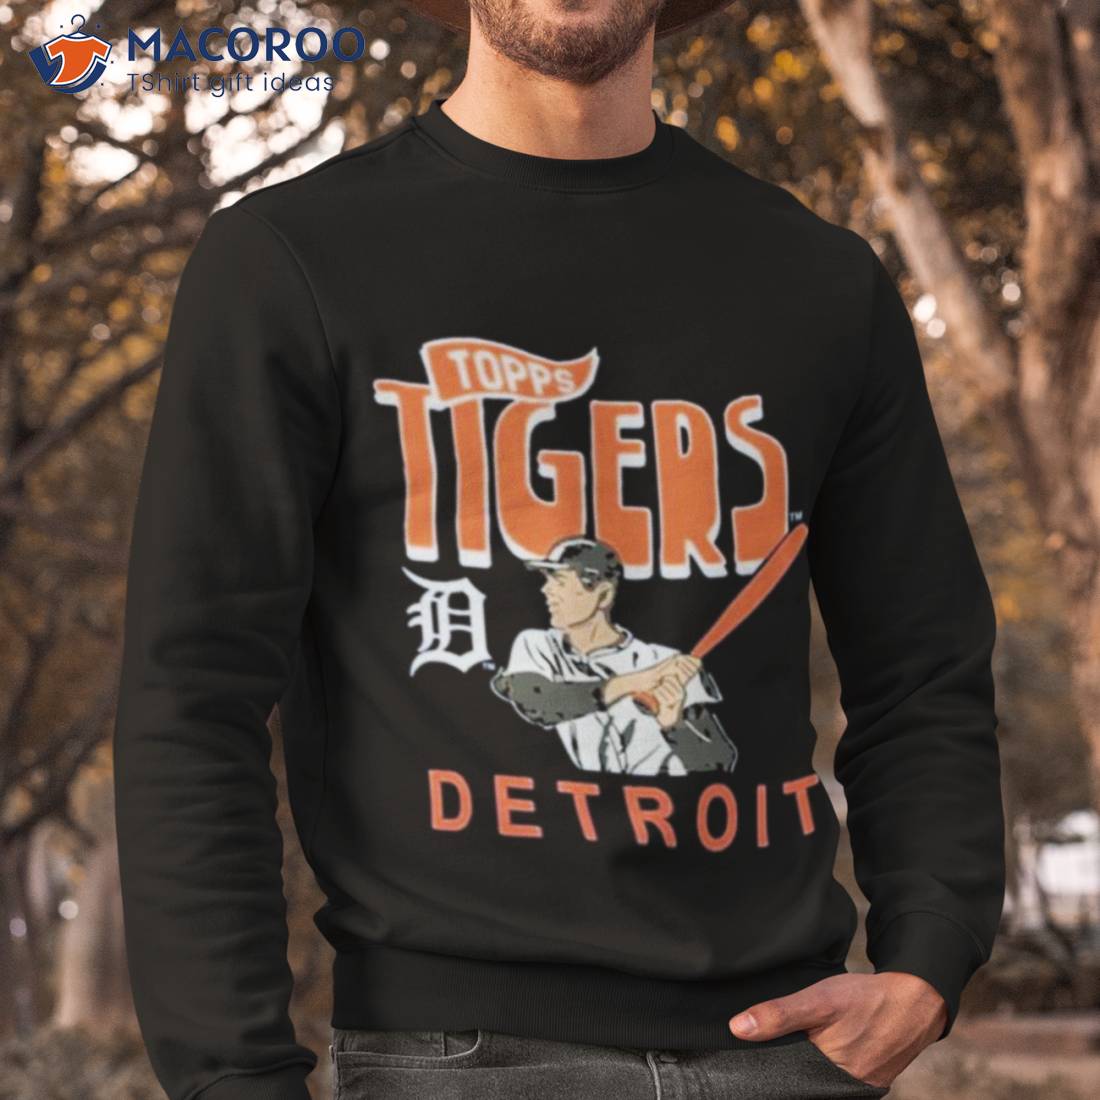 orange detroit tigers t shirt